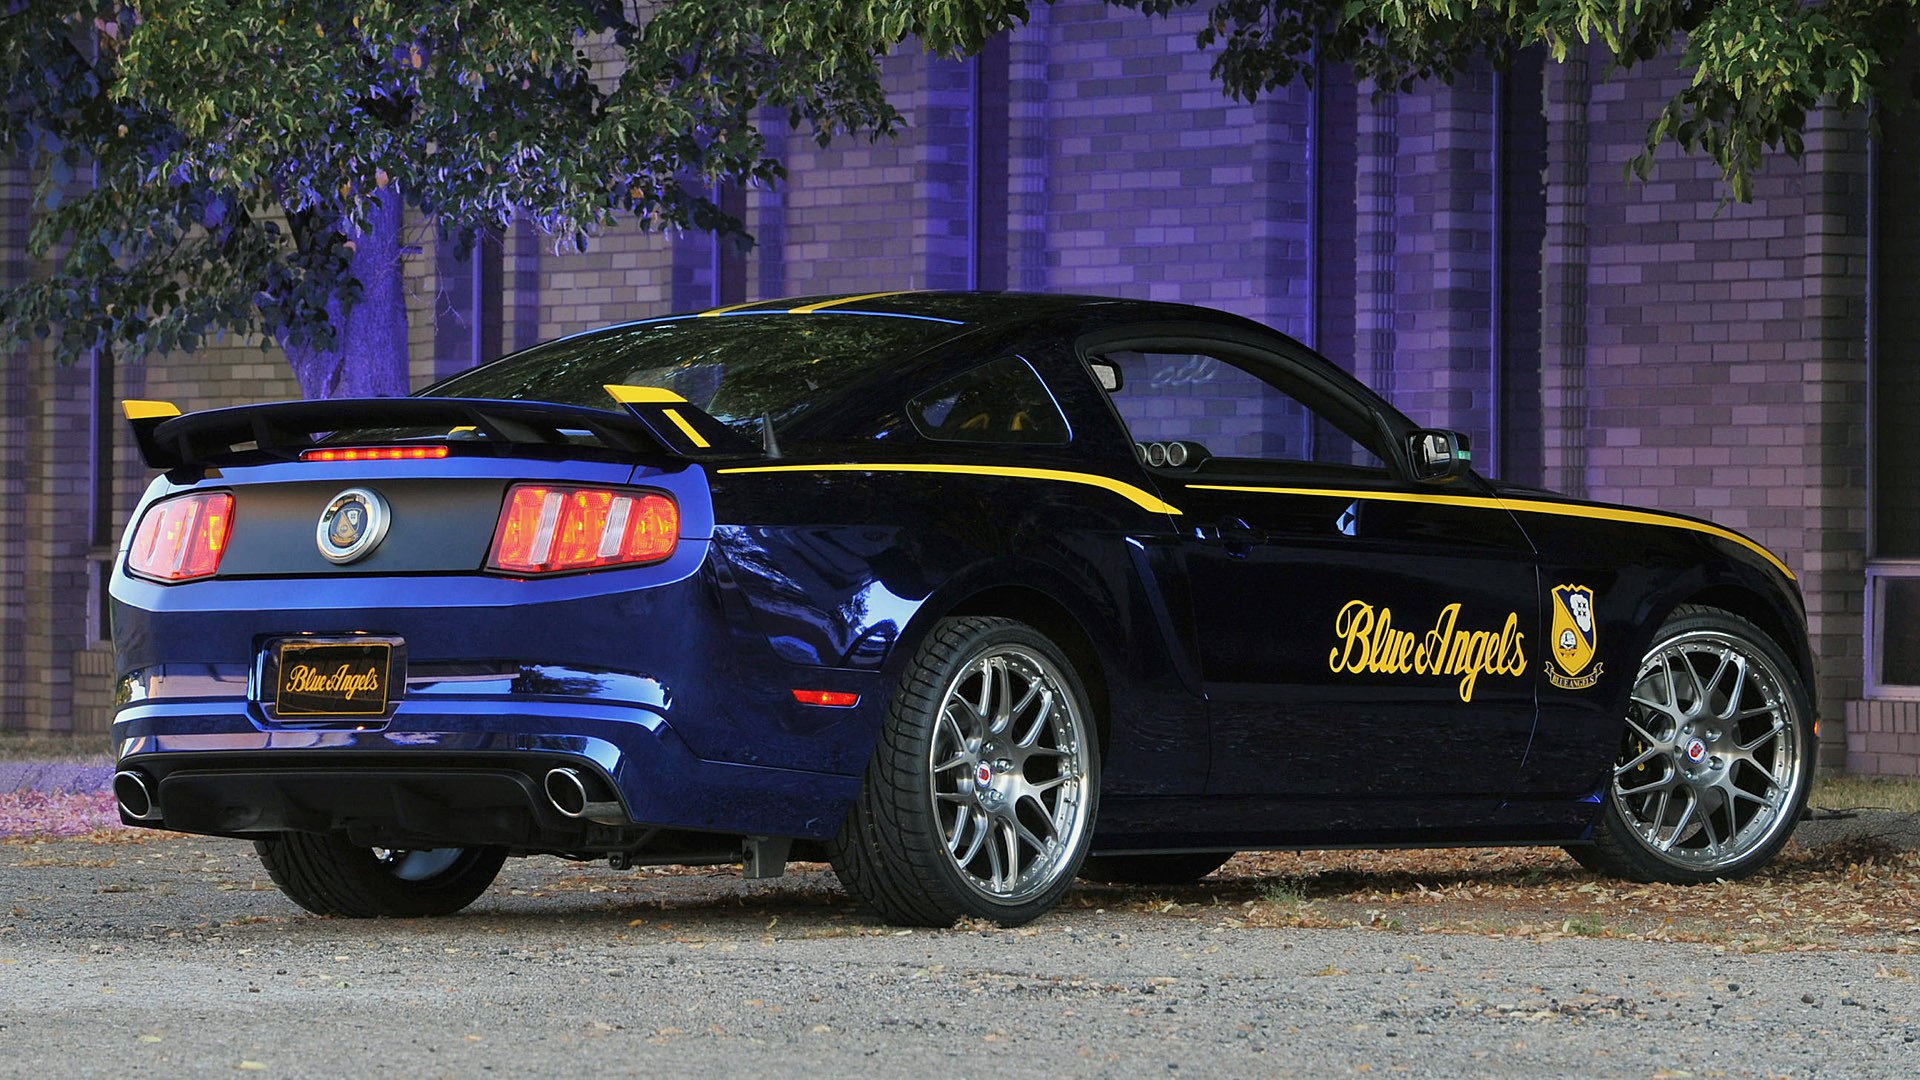 muscle cars, widescreen, 2012 Mustang - desktop wallpaper